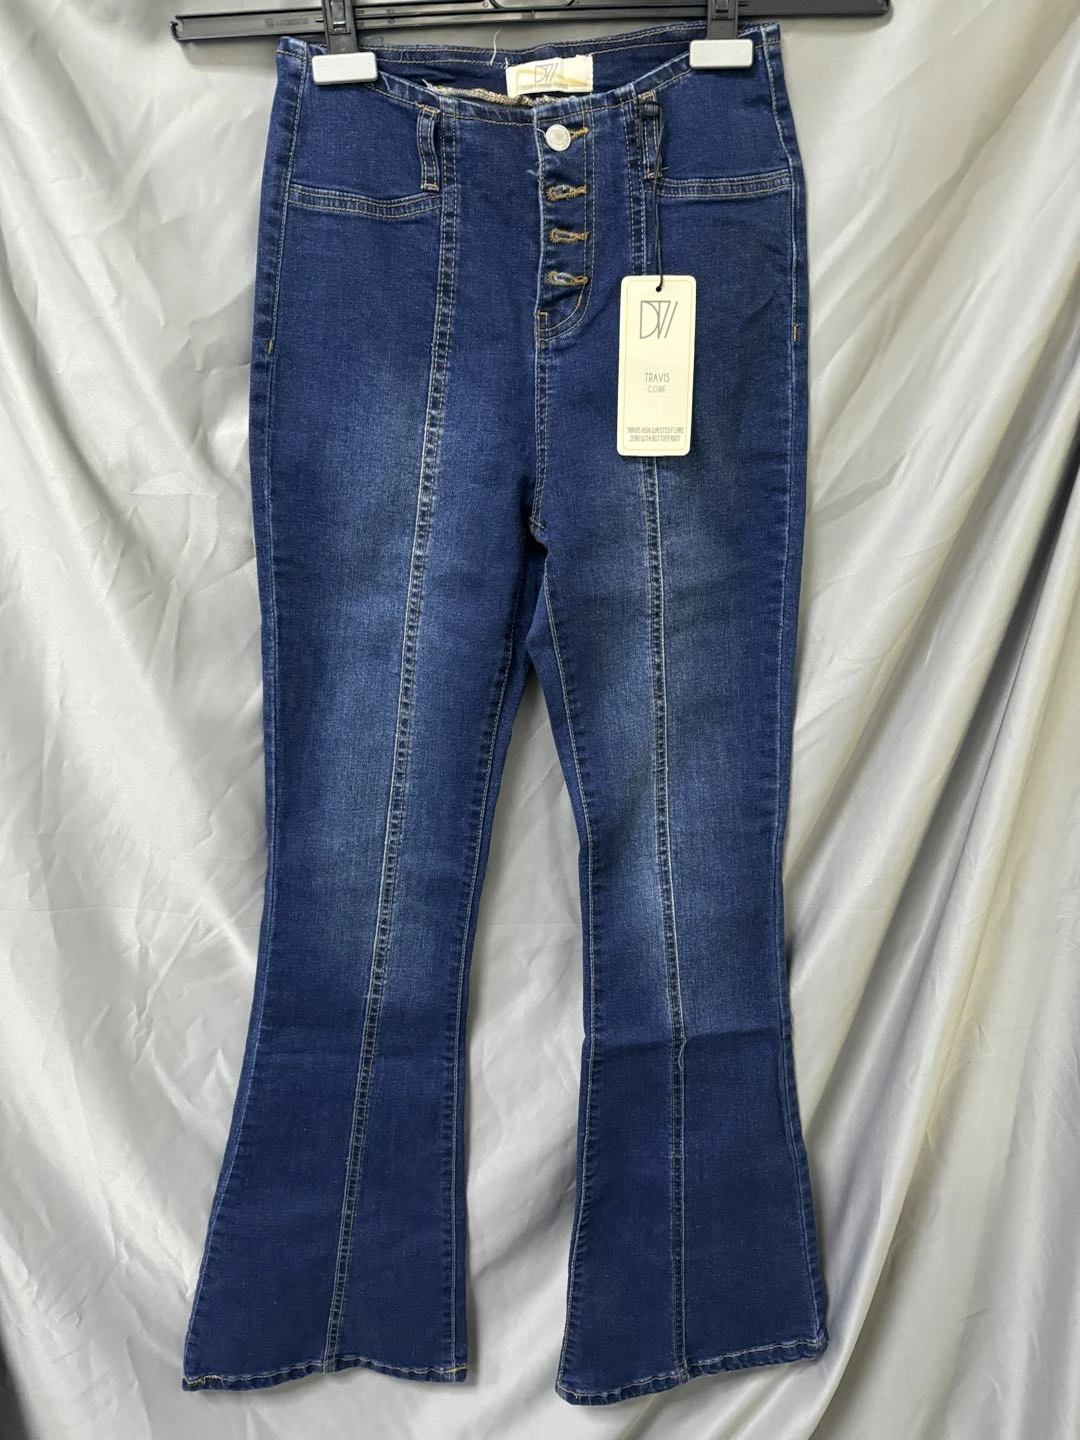 Topshop | Topshop Joni flare jeans in mid blue 2.8折, 独家减免邮费